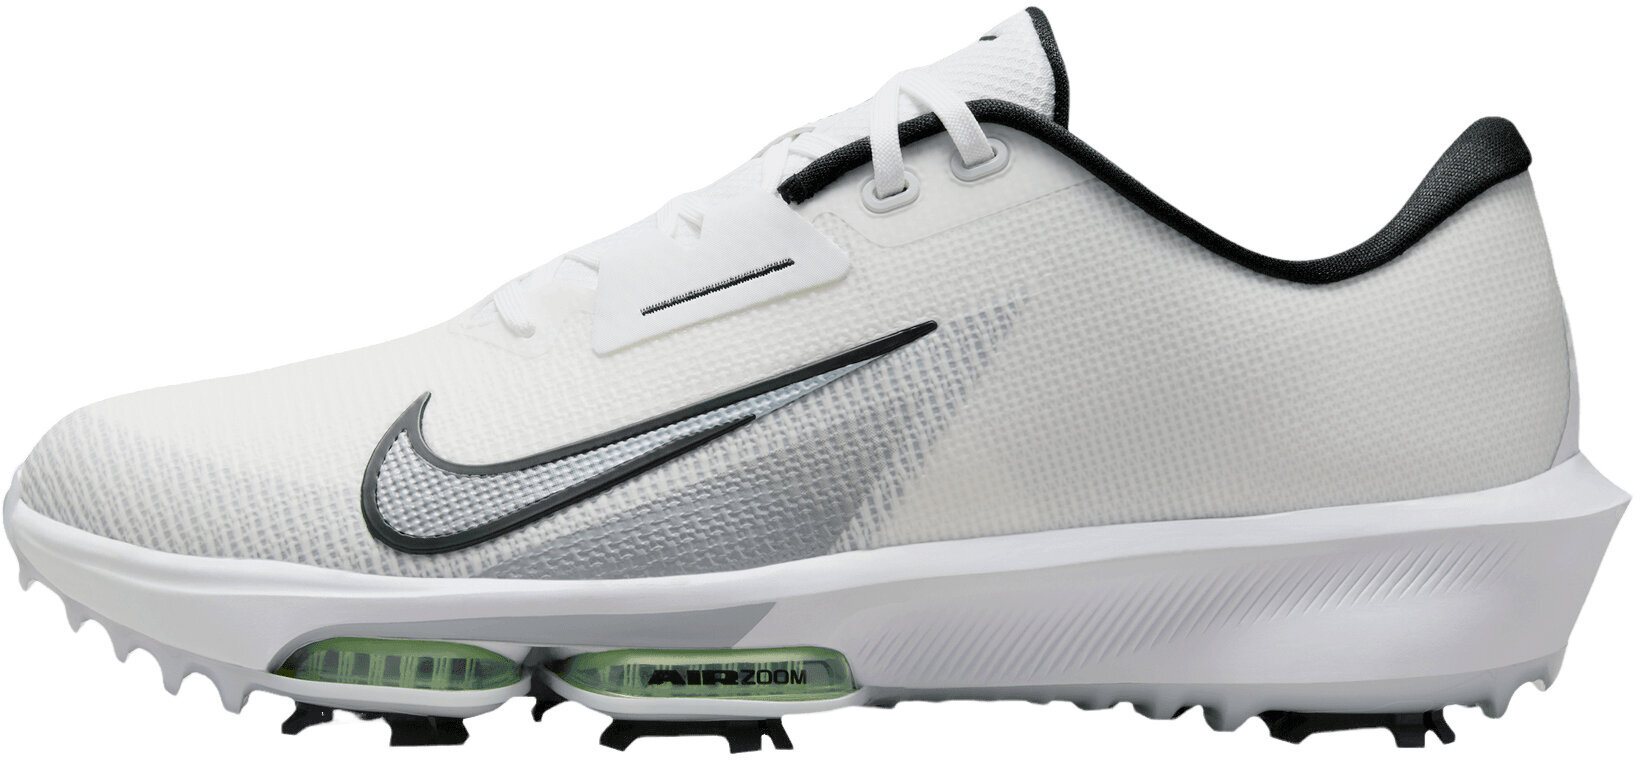 Nike Air Zoom Infinity Tour Next 2 Unisex Golf Shoes White/Black/Vapor Green/Pure Platinum 42 unisex